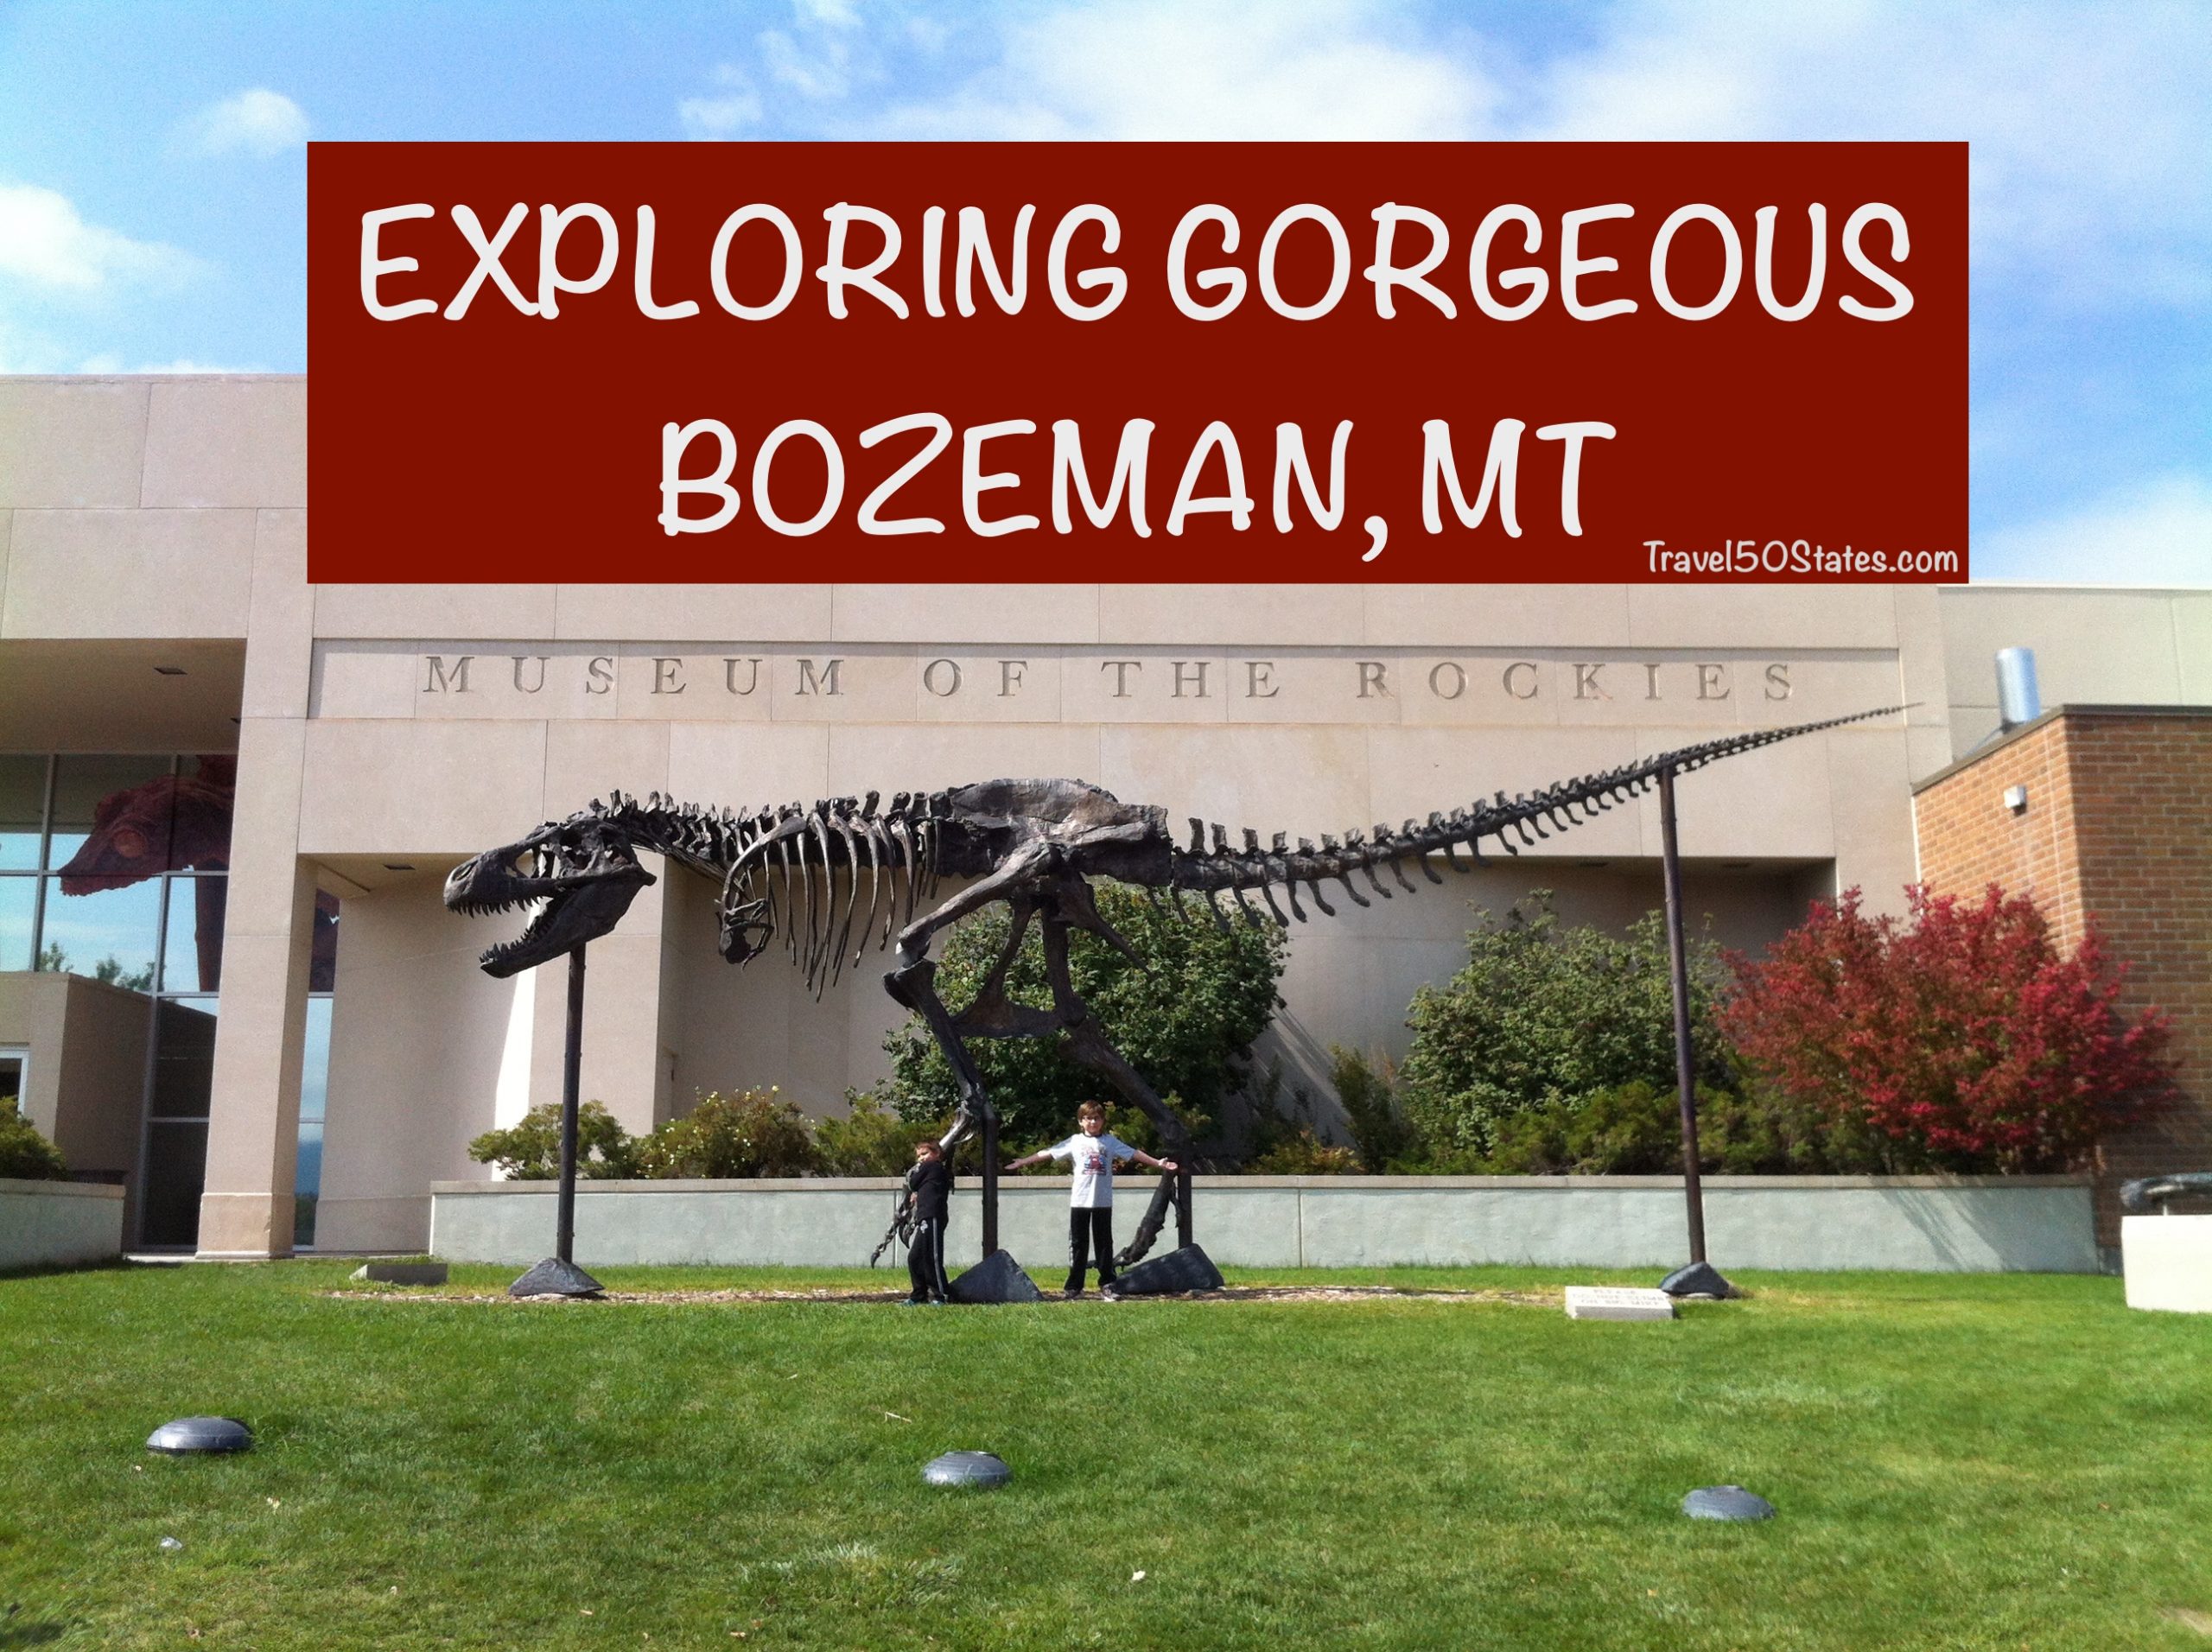 Good Times in Gorgeous Bozeman, Montana